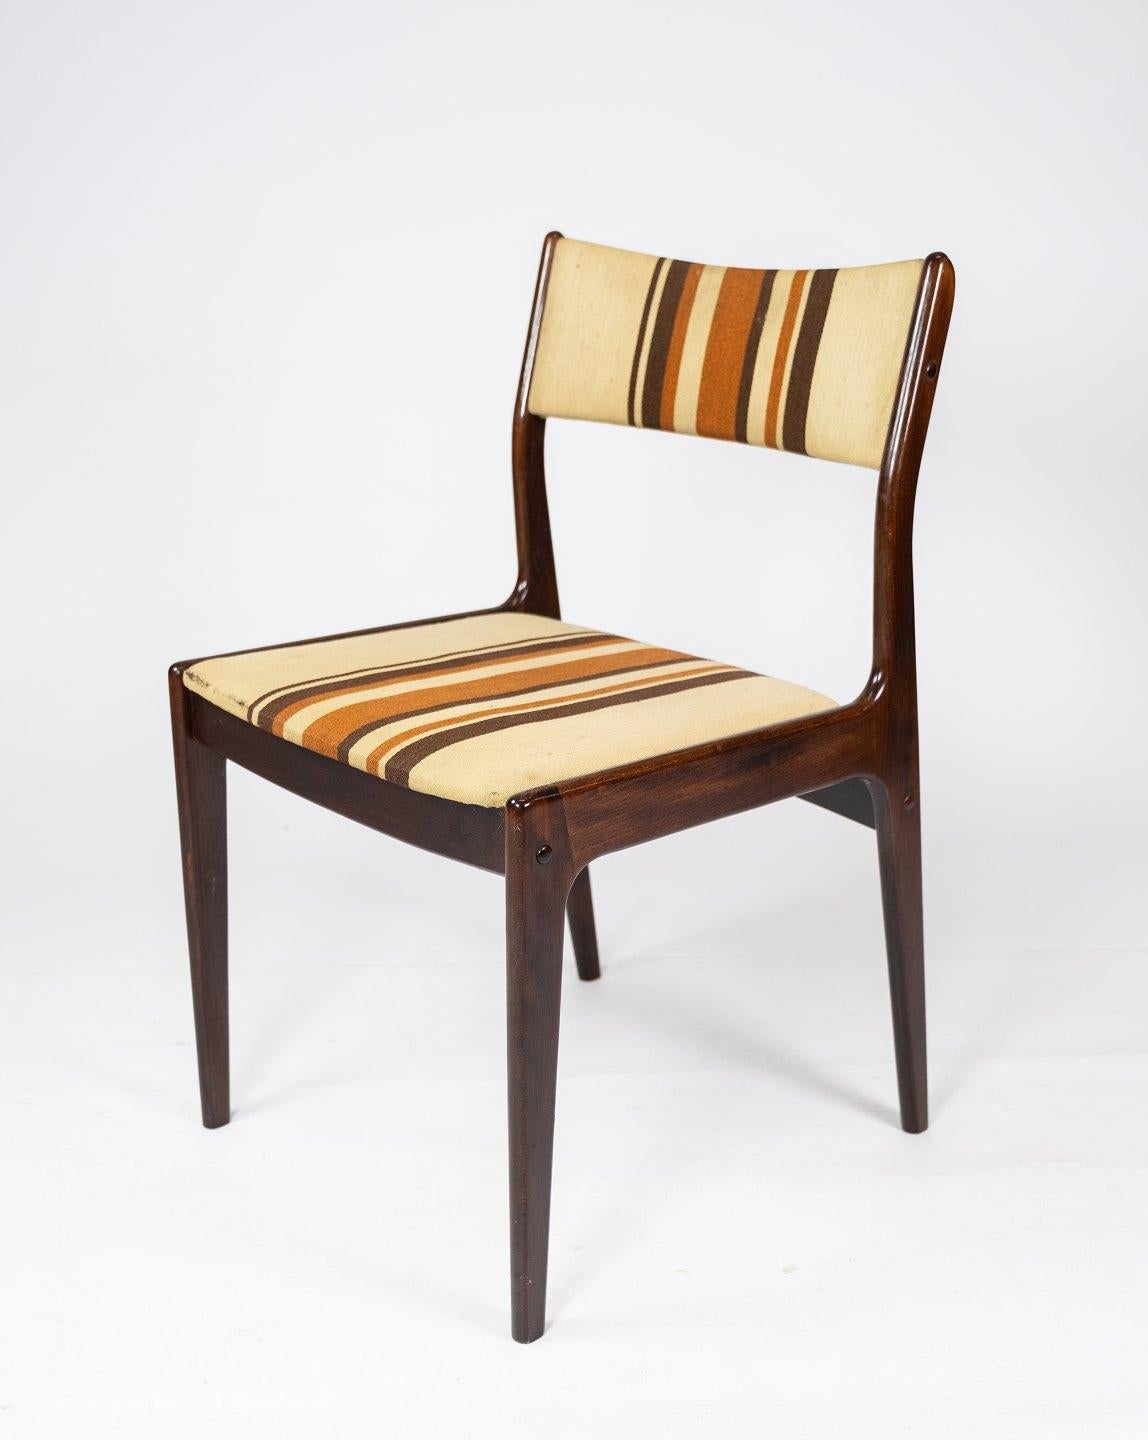 Scandinavian Modern Pair of Chairs in Dark Wood of Danish Design, 1960s